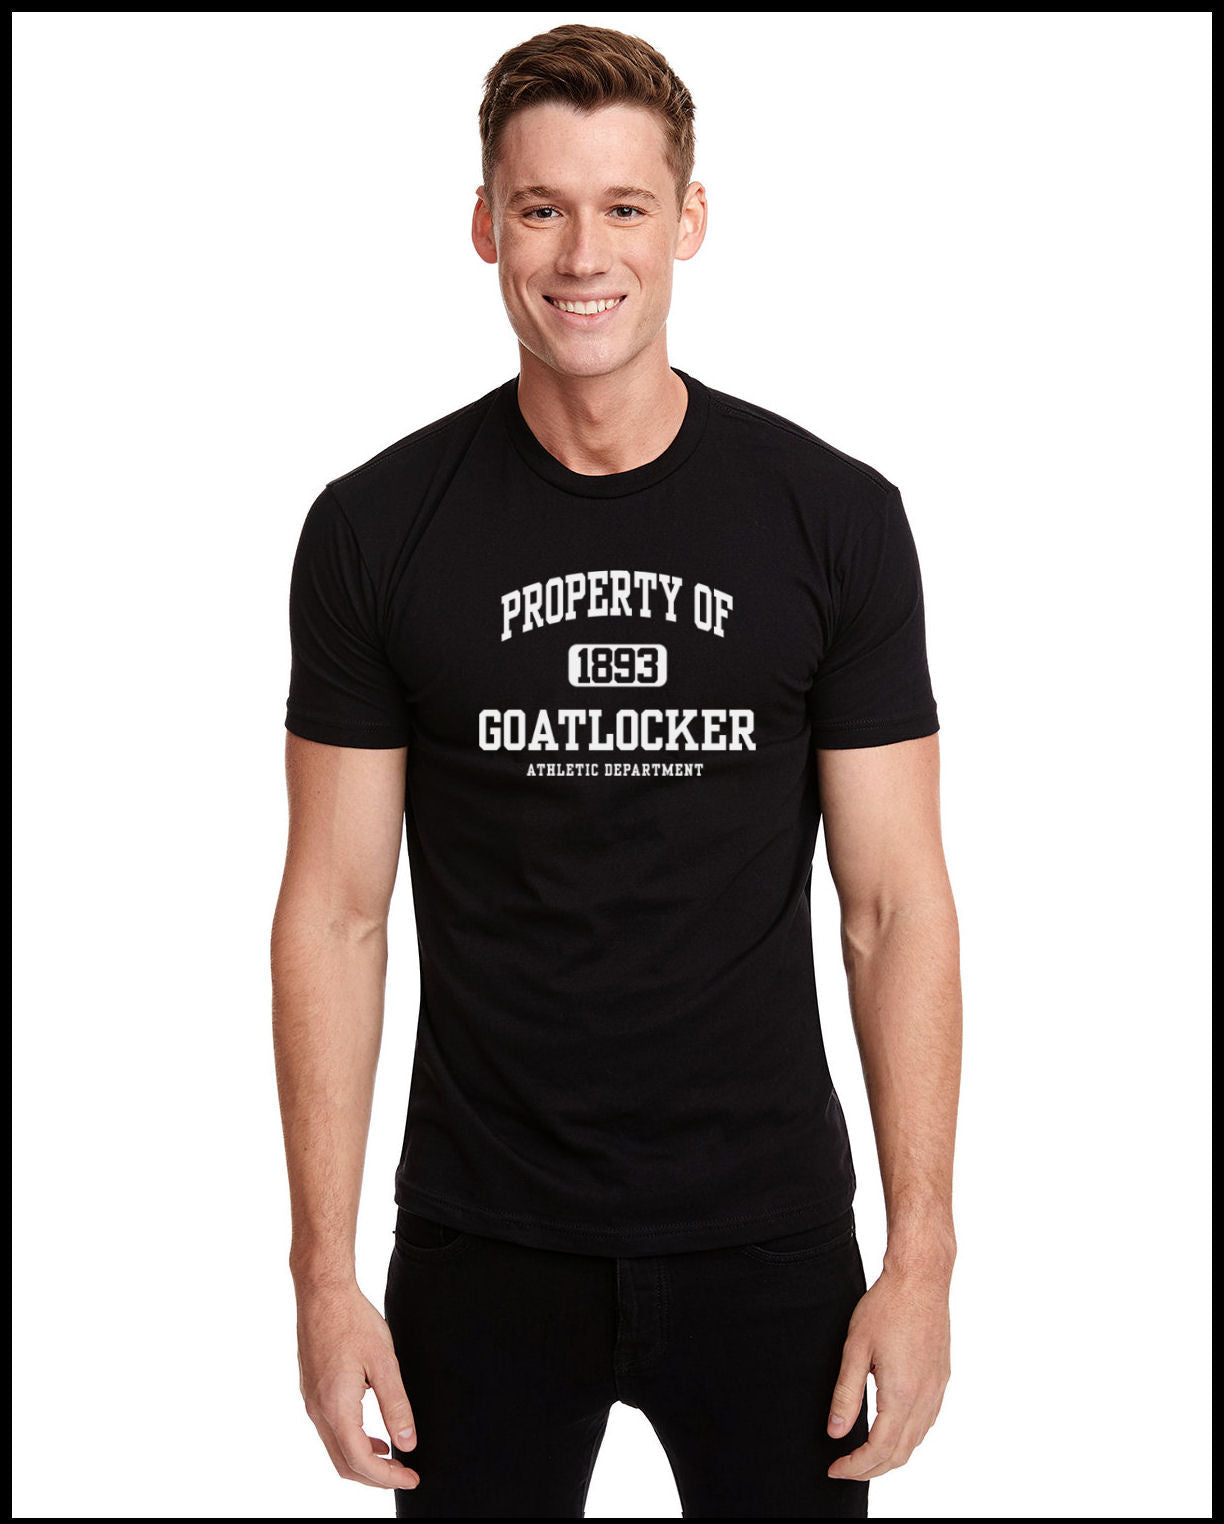 Property of Goat Locker 1893 Black & White T-Shirt Dry Fit Athletic